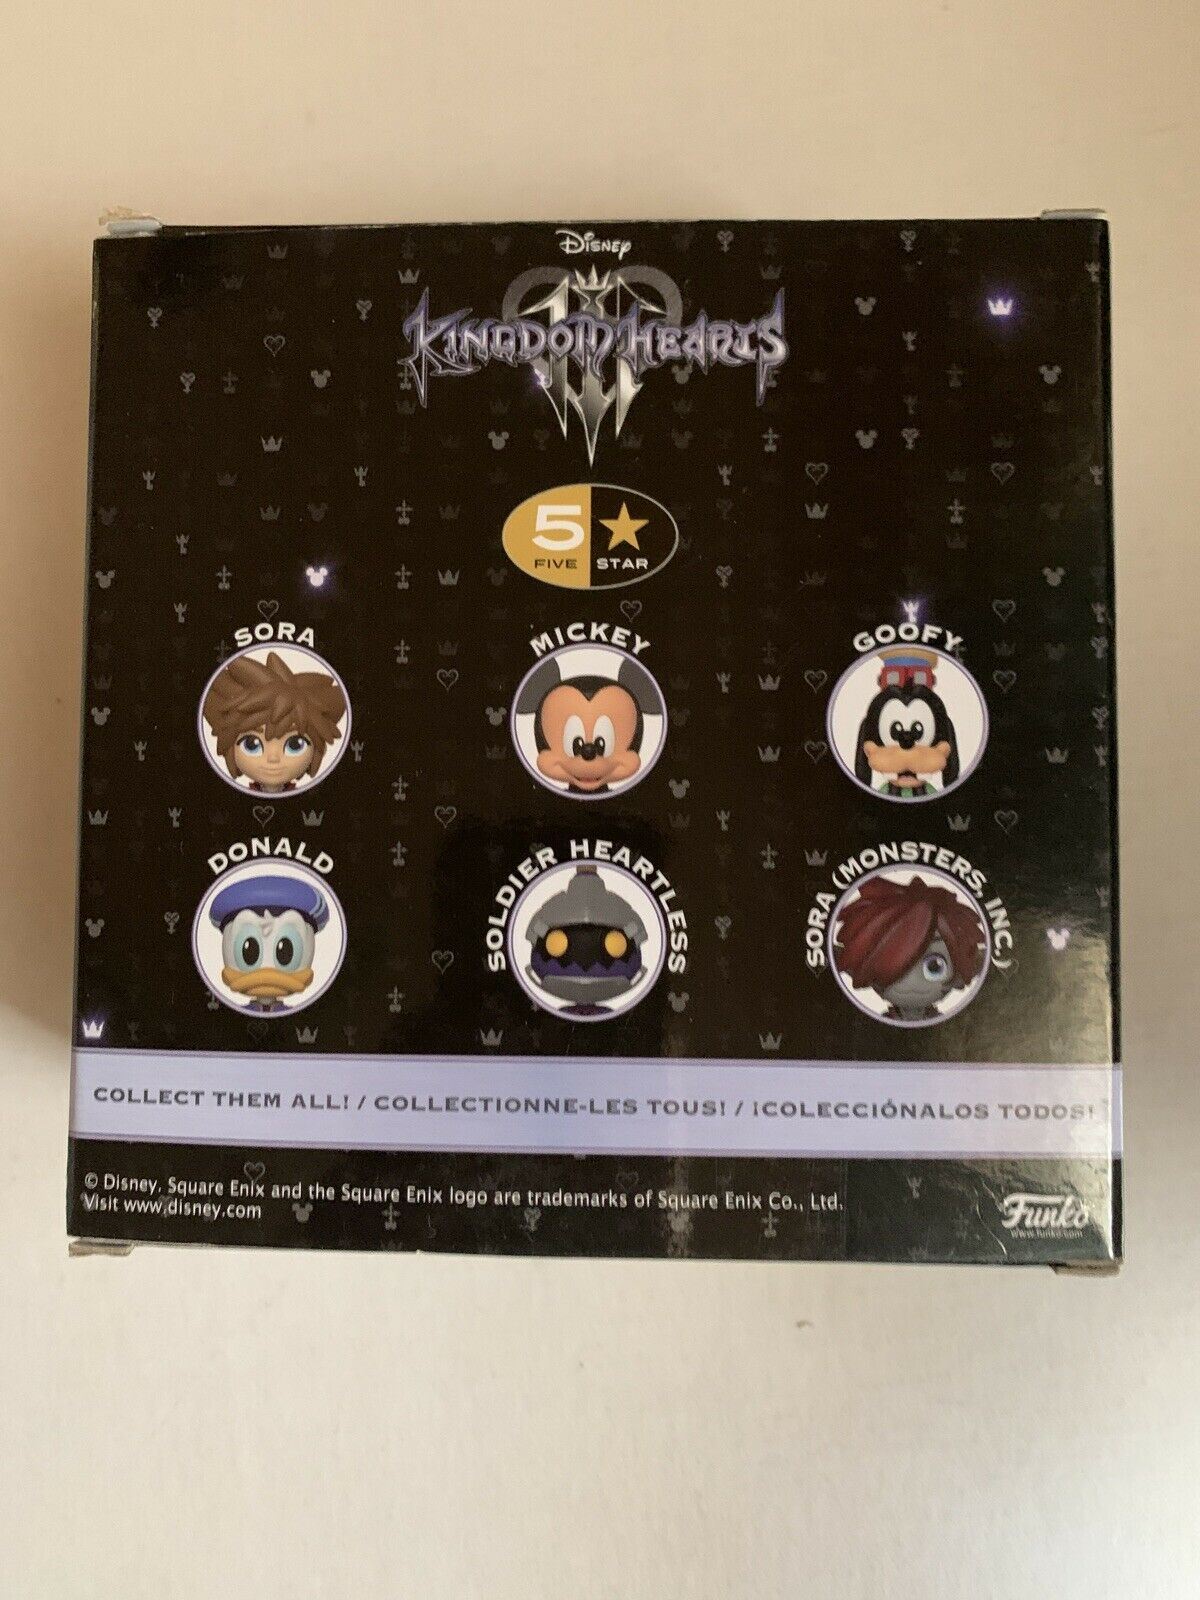 Sora (Monsters, Inc.) - Disney Kingdom Hearts Funko Vinyl Figure